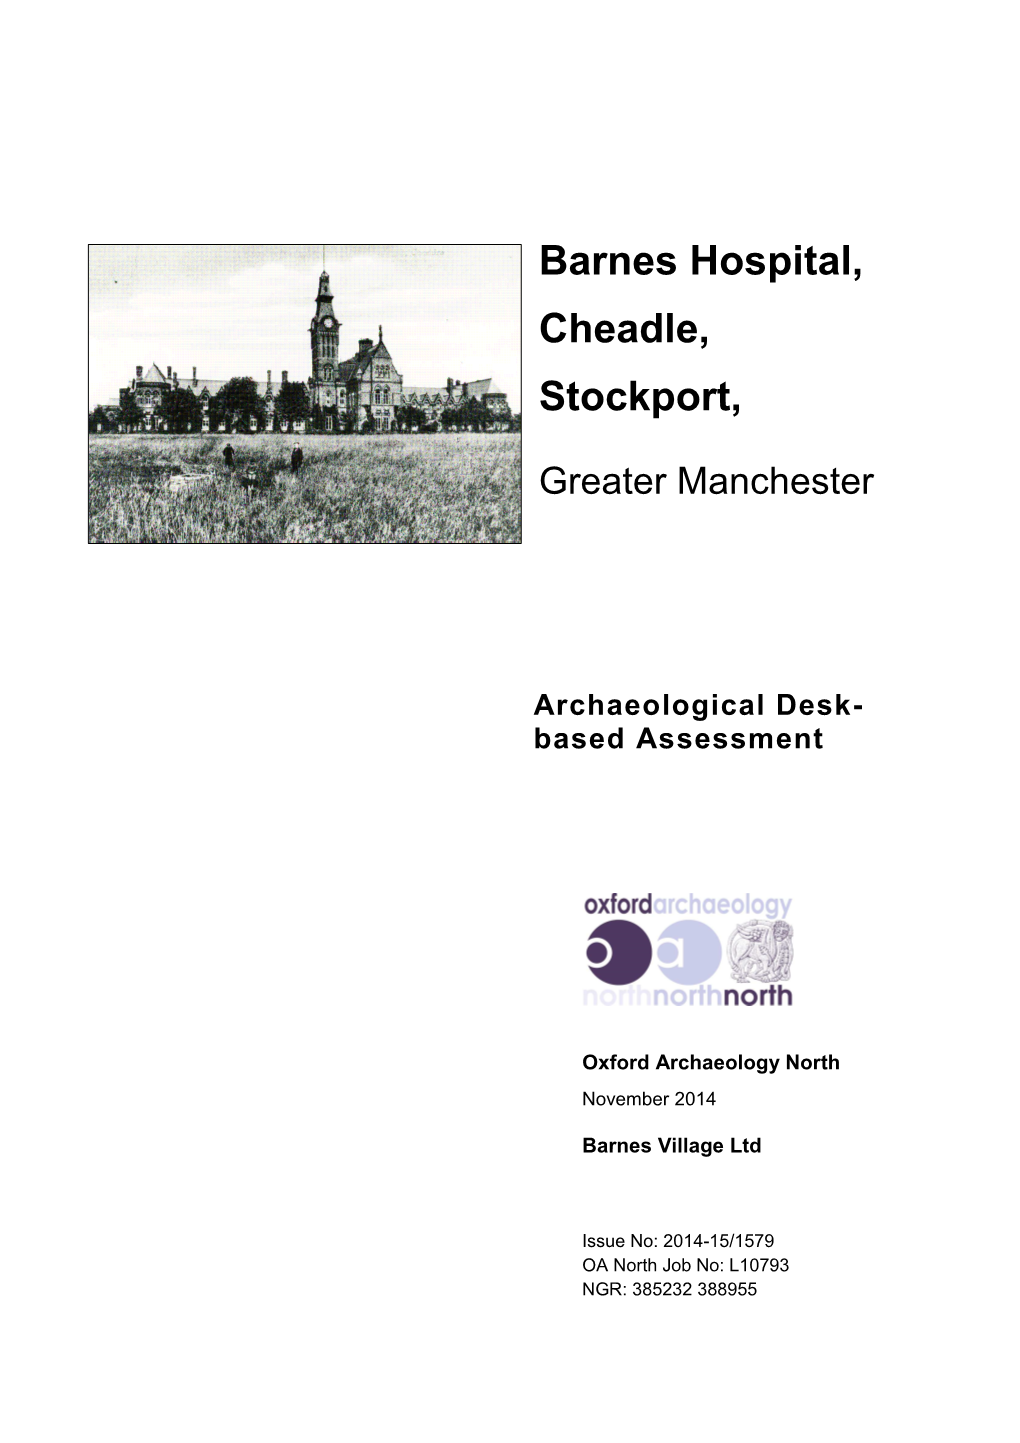 Barnes Hospital, Cheadle, Stockport